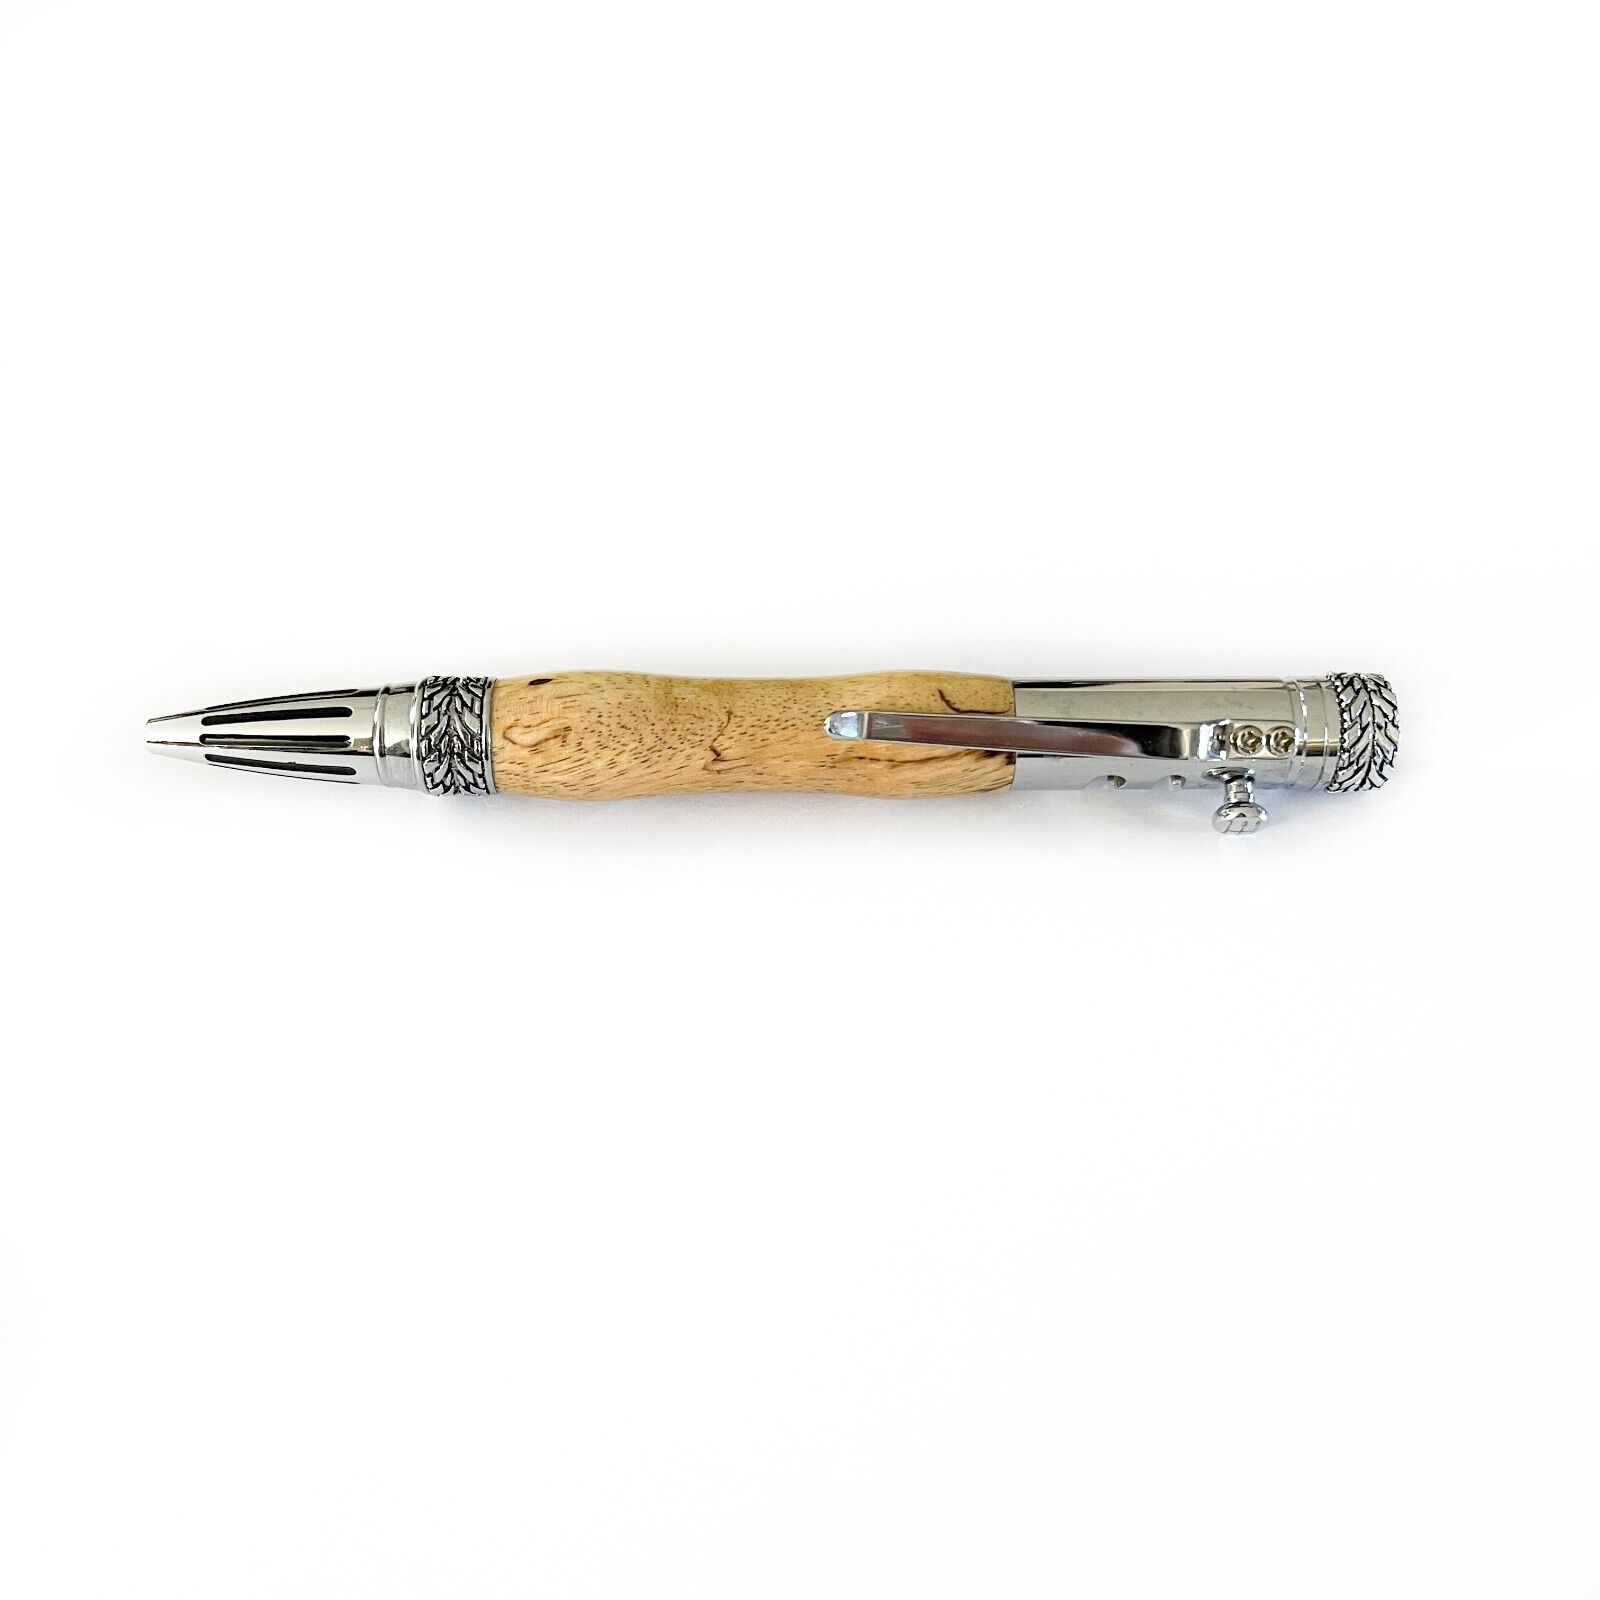 Handcrafted Gear Shift Pen, Writing Pen, Ballpoint Pen, Wood Pen, Wooden Pen